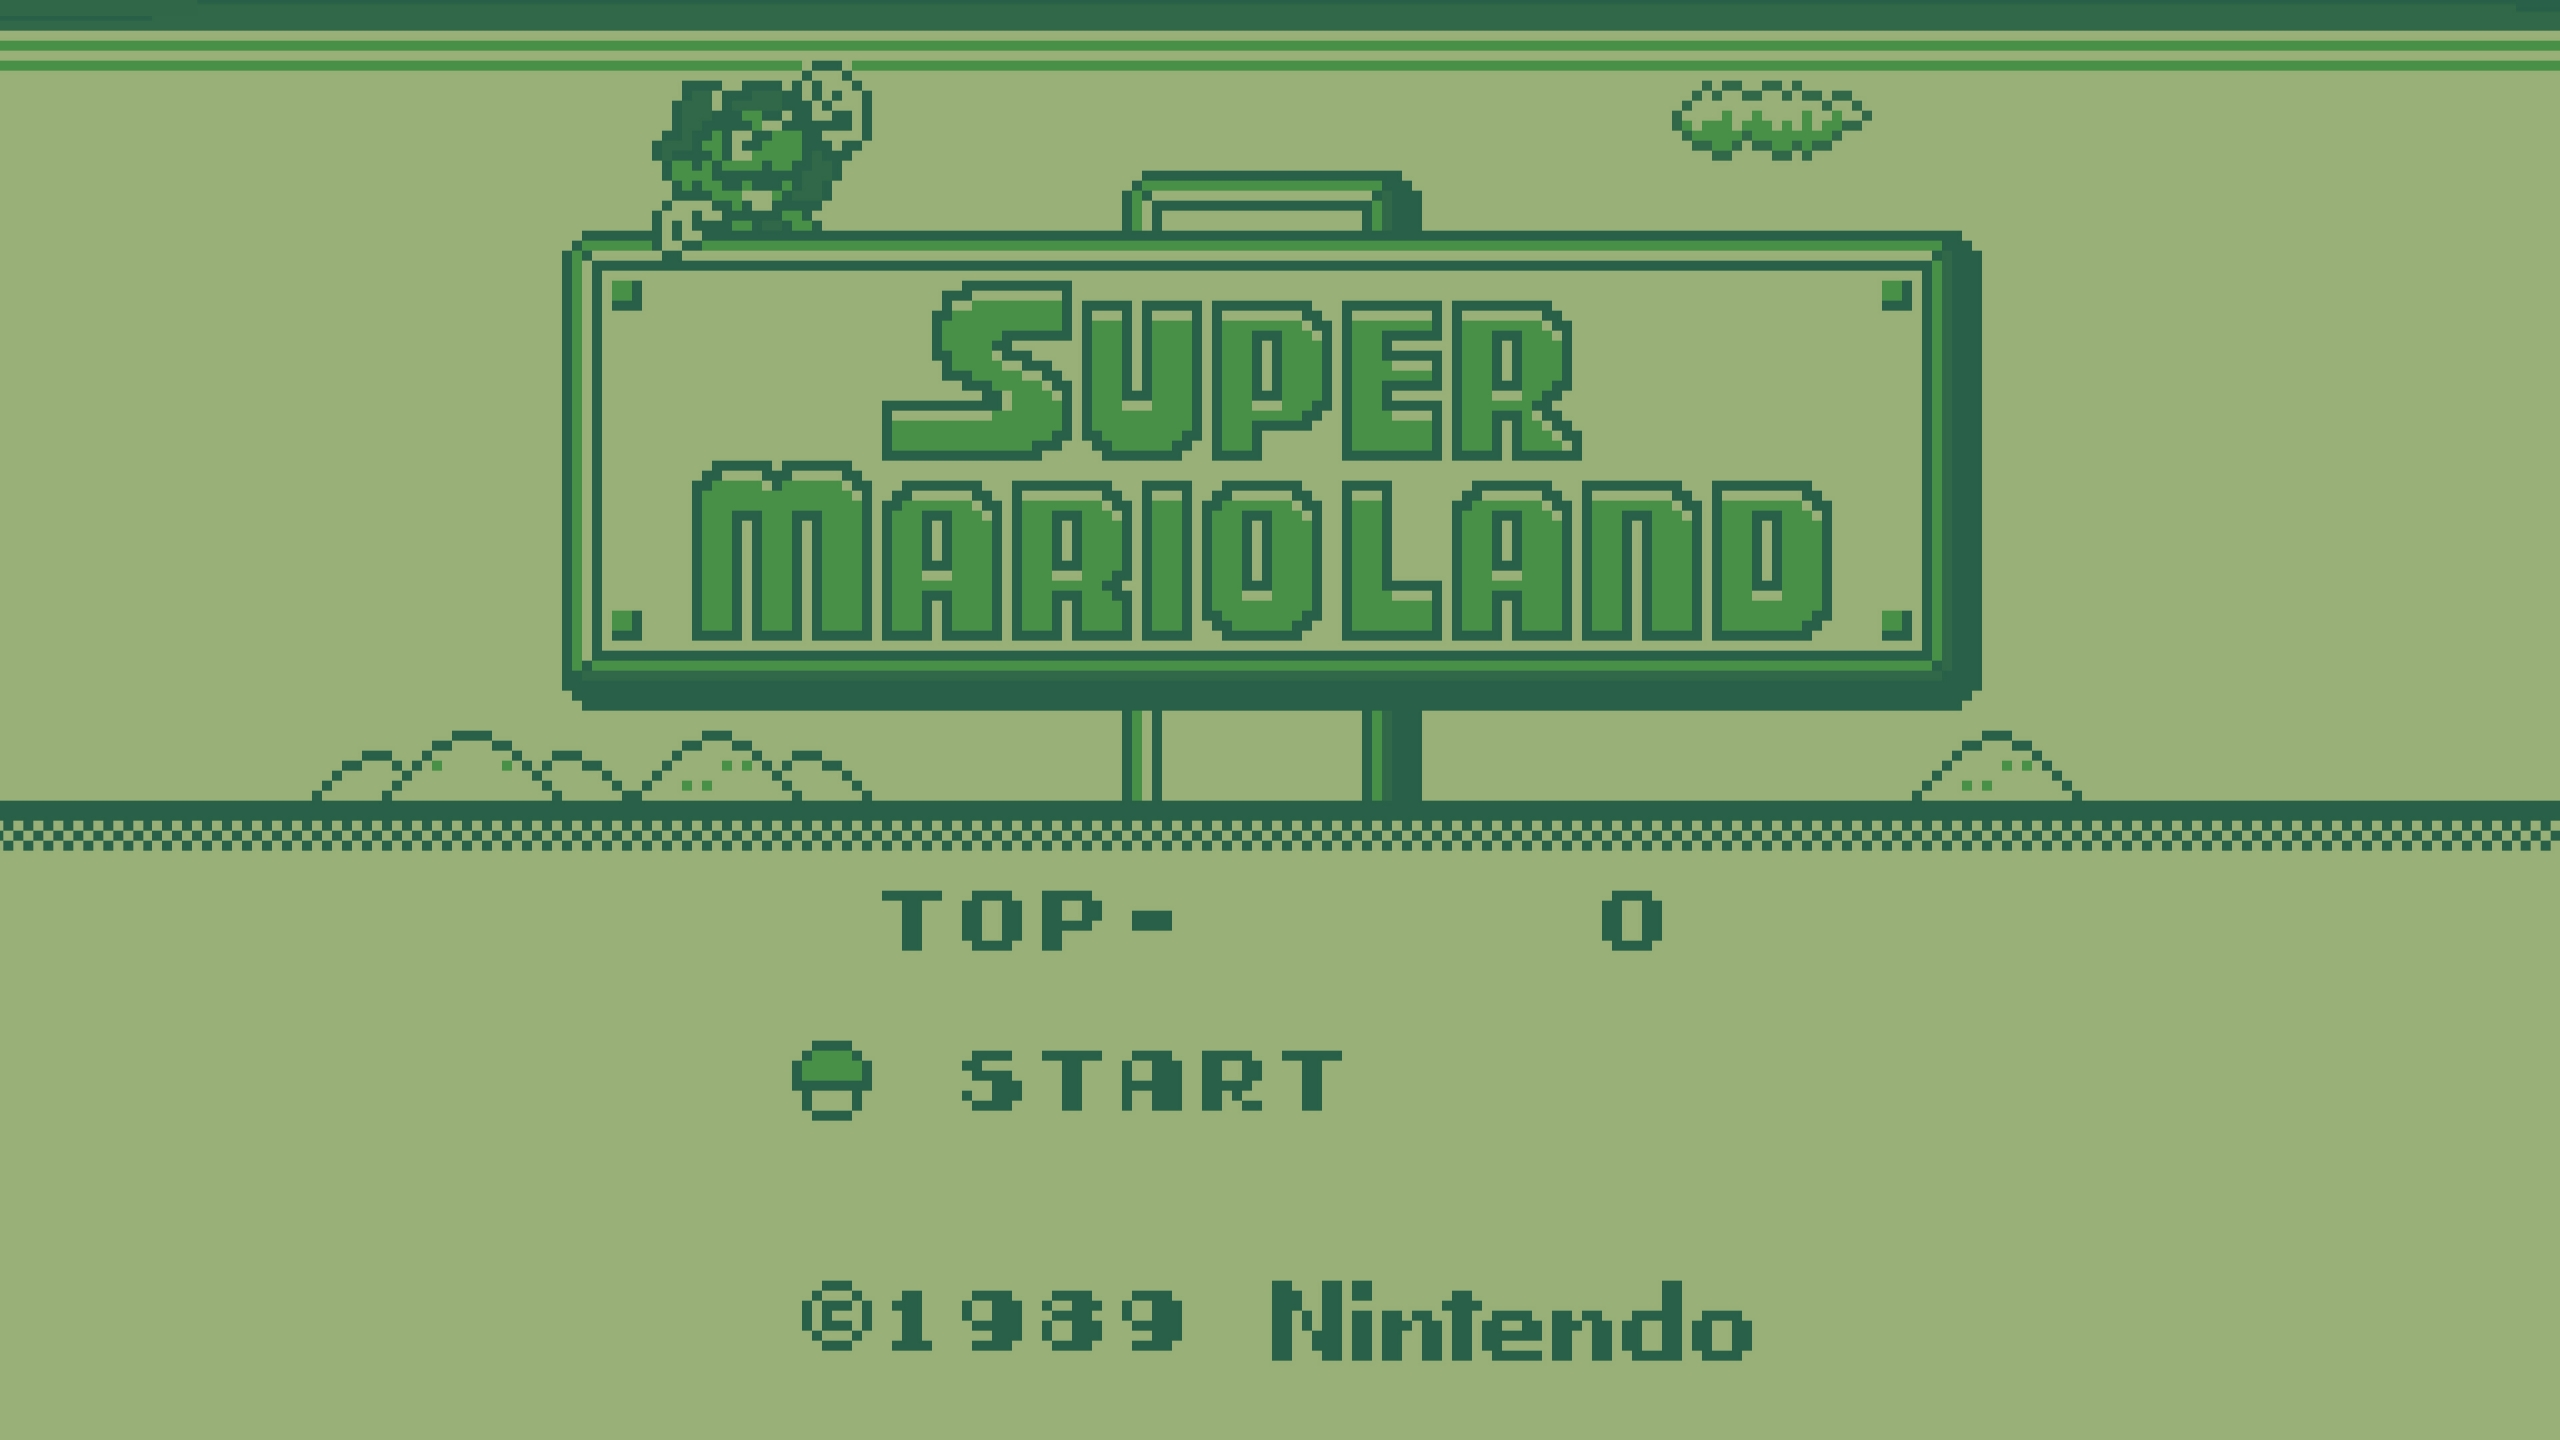 Super Mario Land: free desktop wallpaper and background image